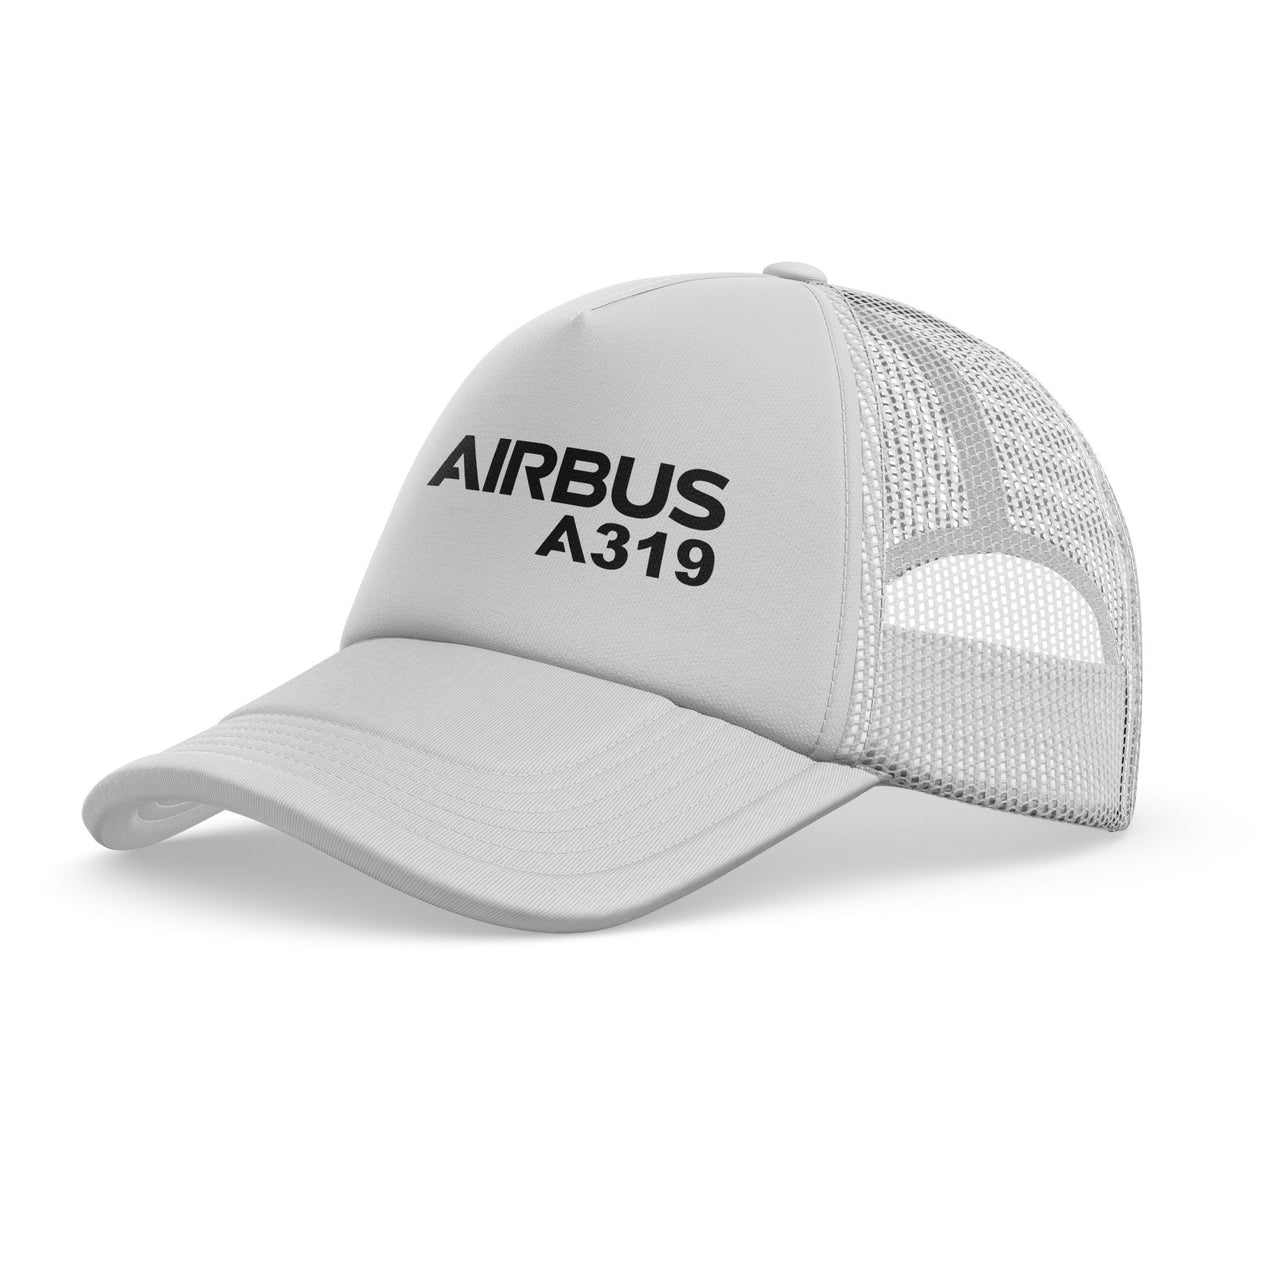 Airbus A319 & Text Designed Trucker Caps & Hats